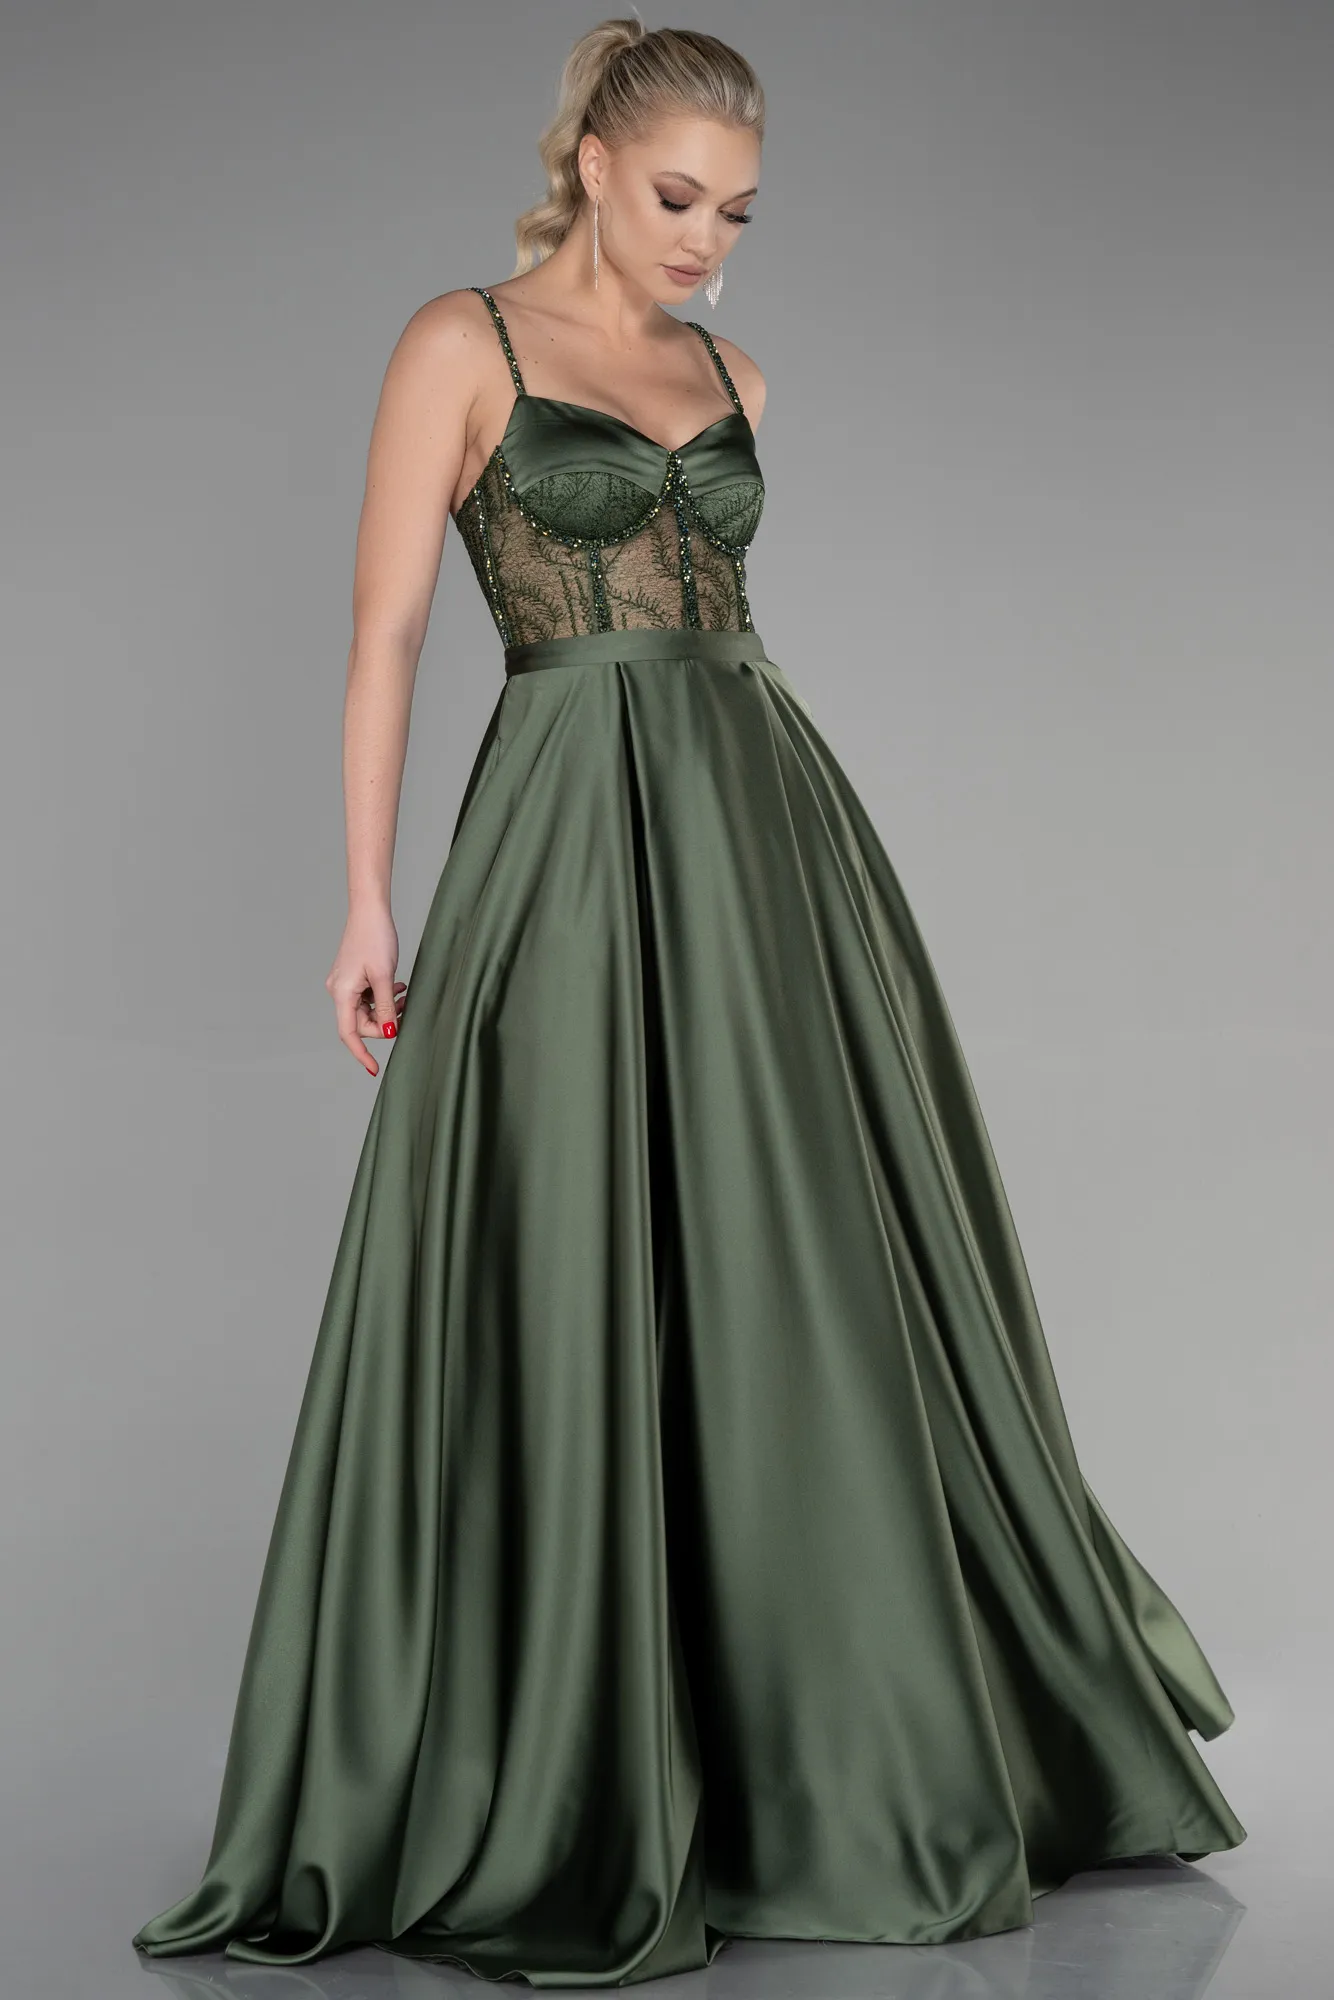 Olive Drab-Long Satin Evening Dress ABU3455